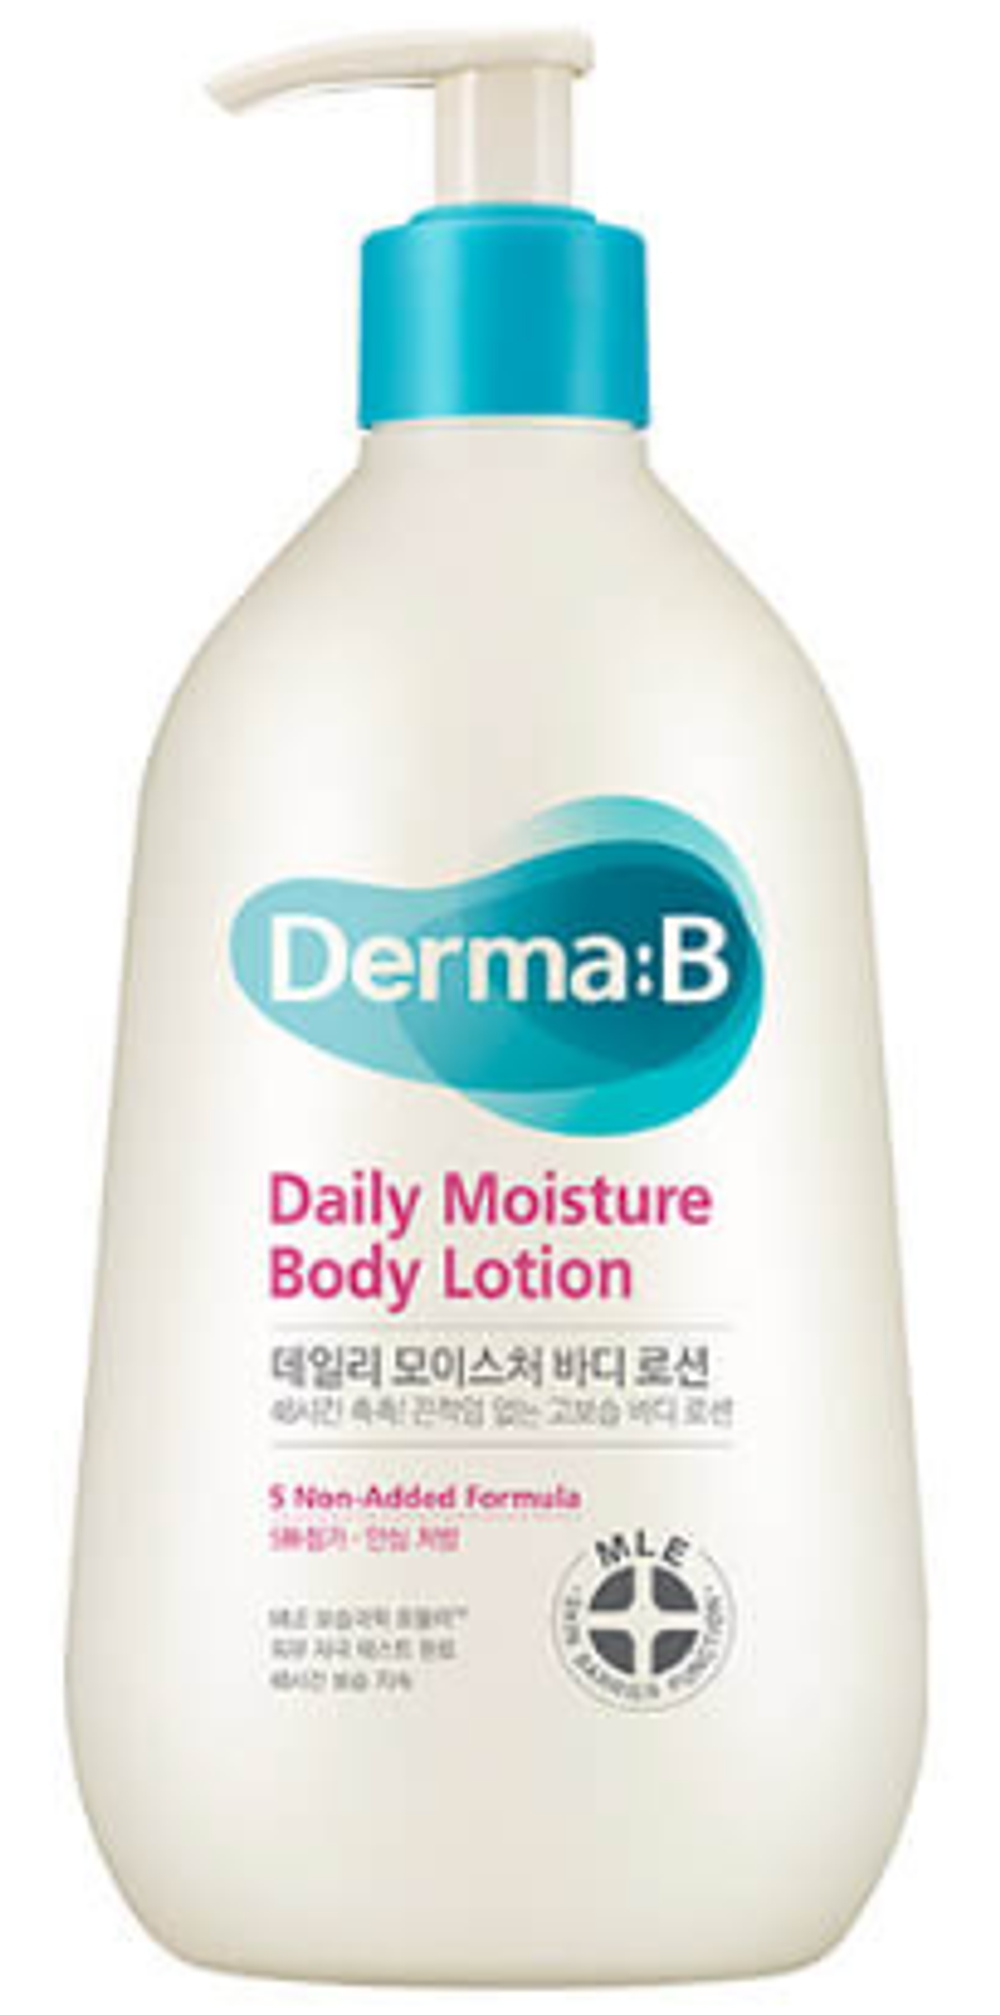 Derma:B Daily Moisture Body Lotion лосьон для тела 400мл